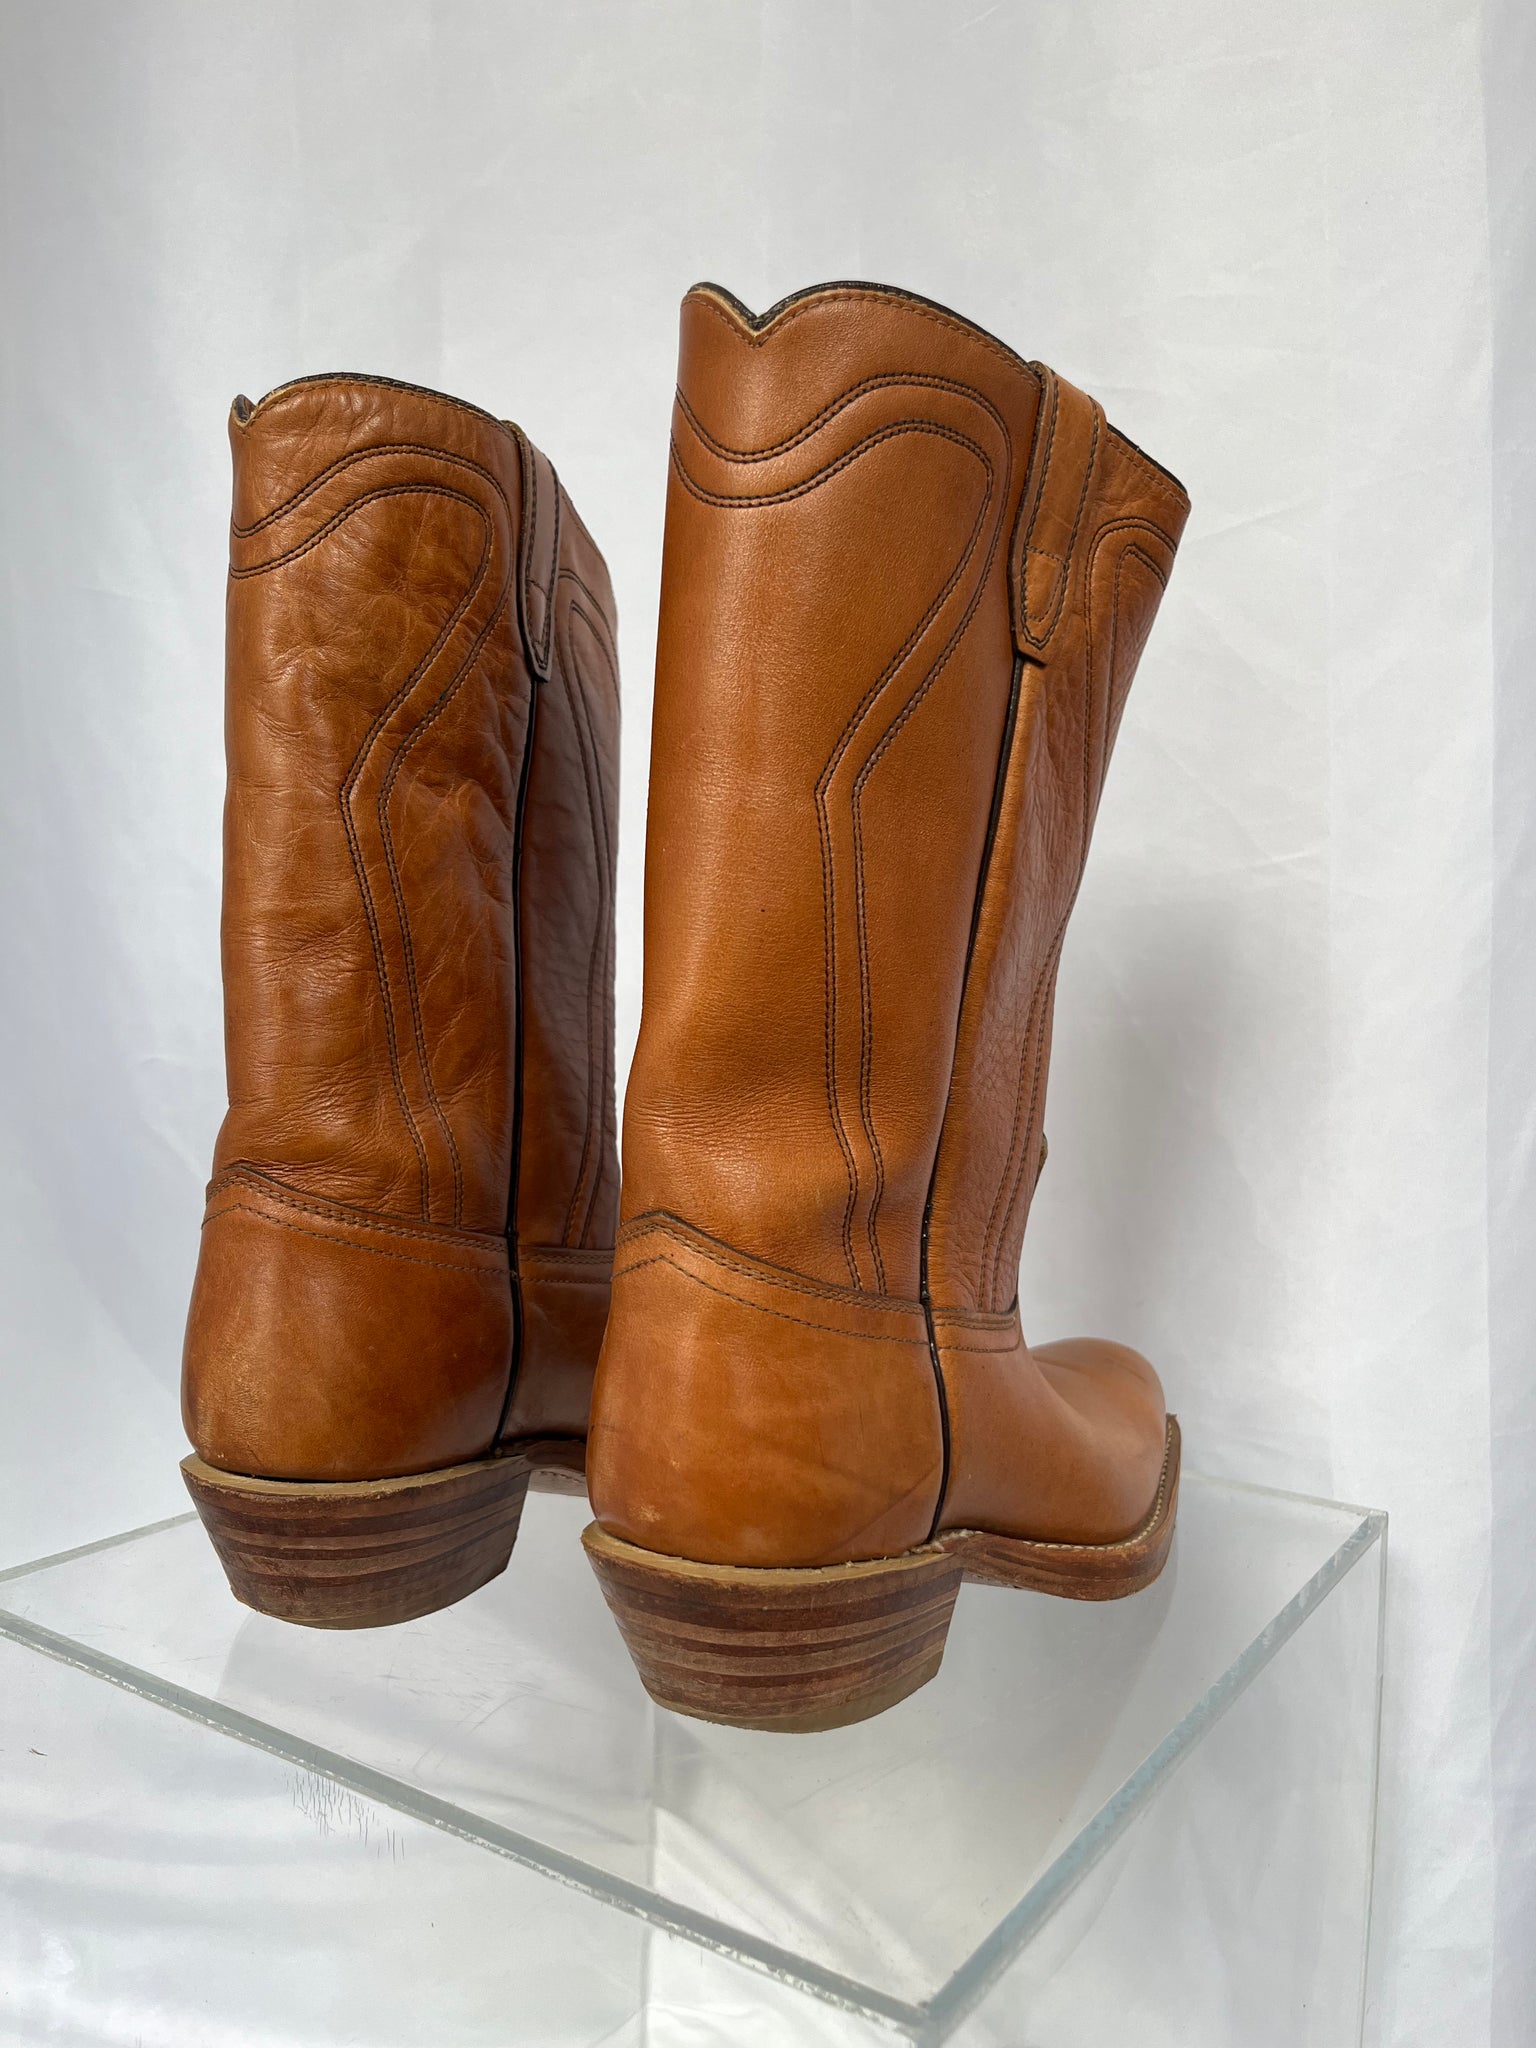 Perfect Square toe cowboy boots